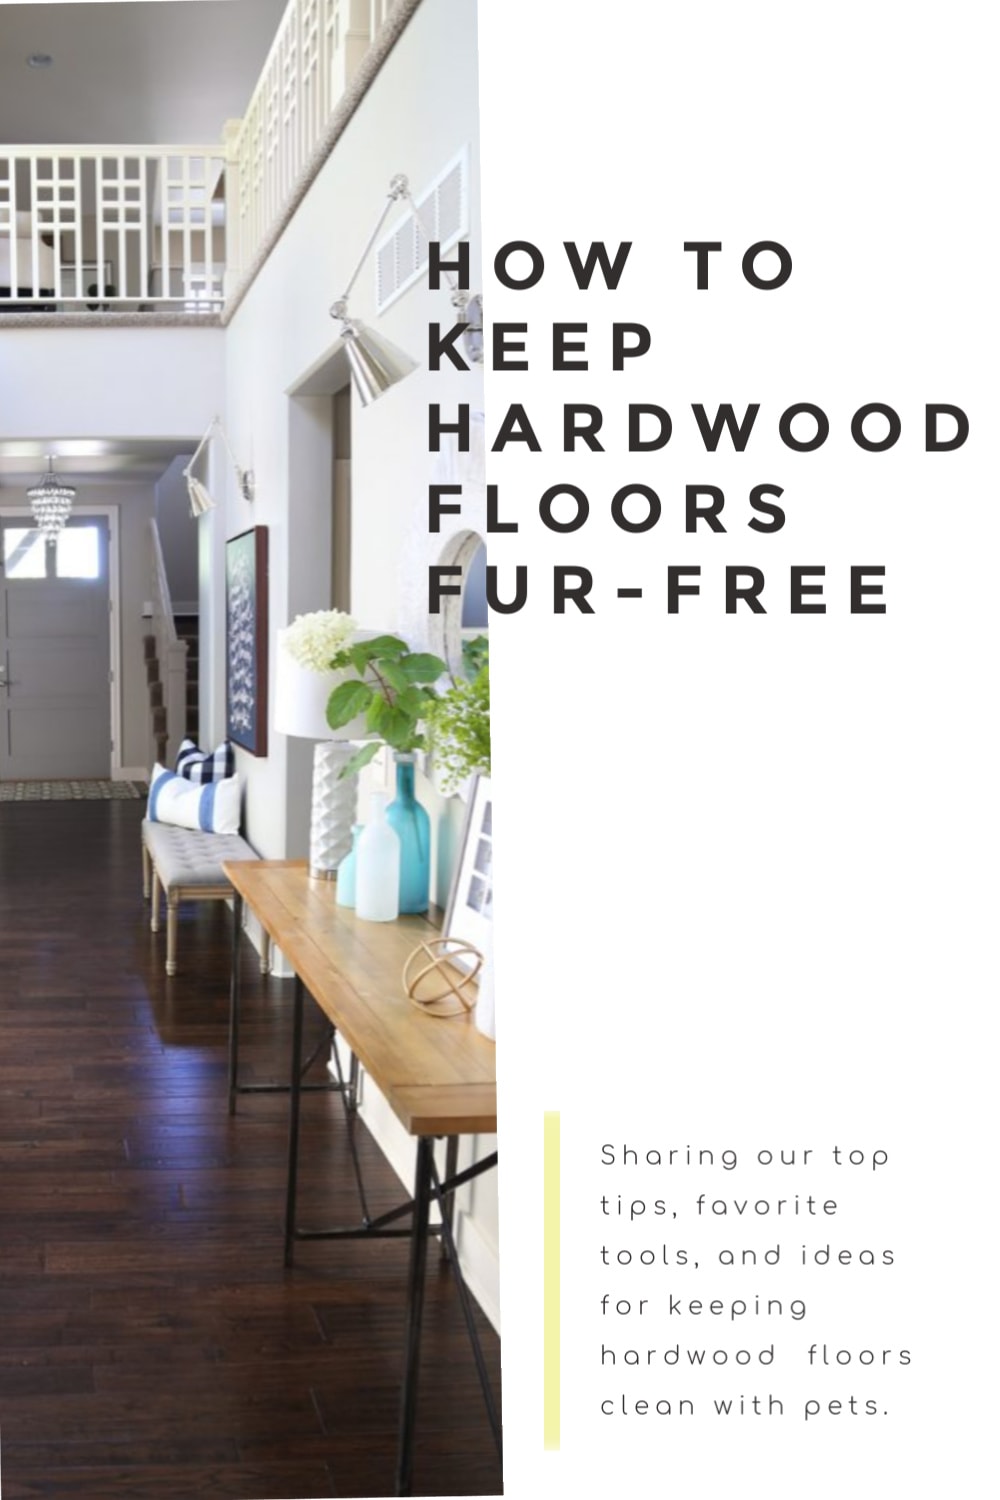 How To Have Fur Free Floors With Pets, Easiest Way To Keep Hardwood Floors Clean